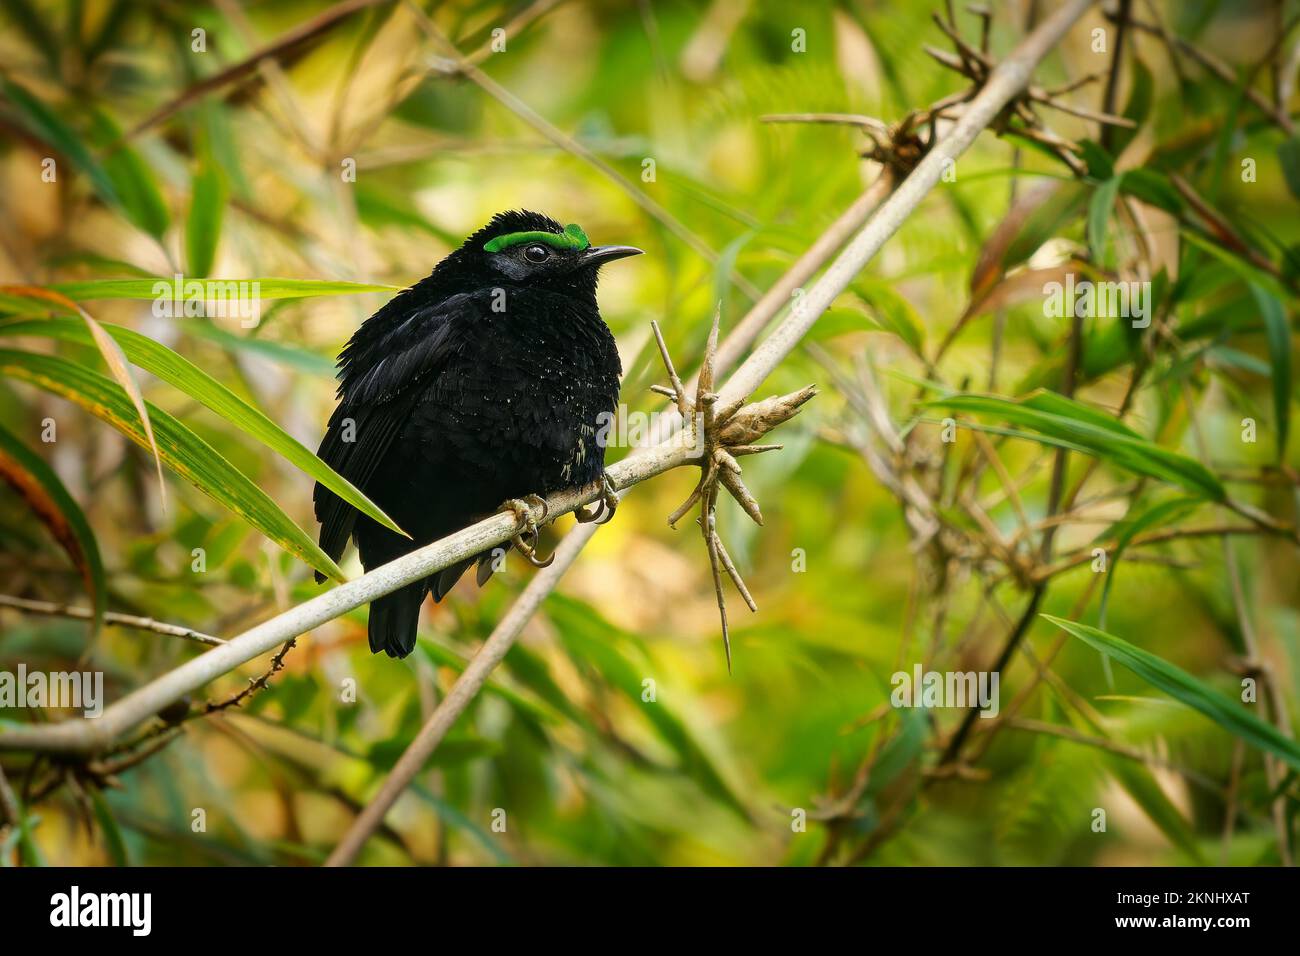 Asity de terciopelo - Philepitta castanea pájaro negro con la ceja verde de la familia Philepittidae, endémica de Madagascar, subtropical o tropical húmedo lo Foto de stock